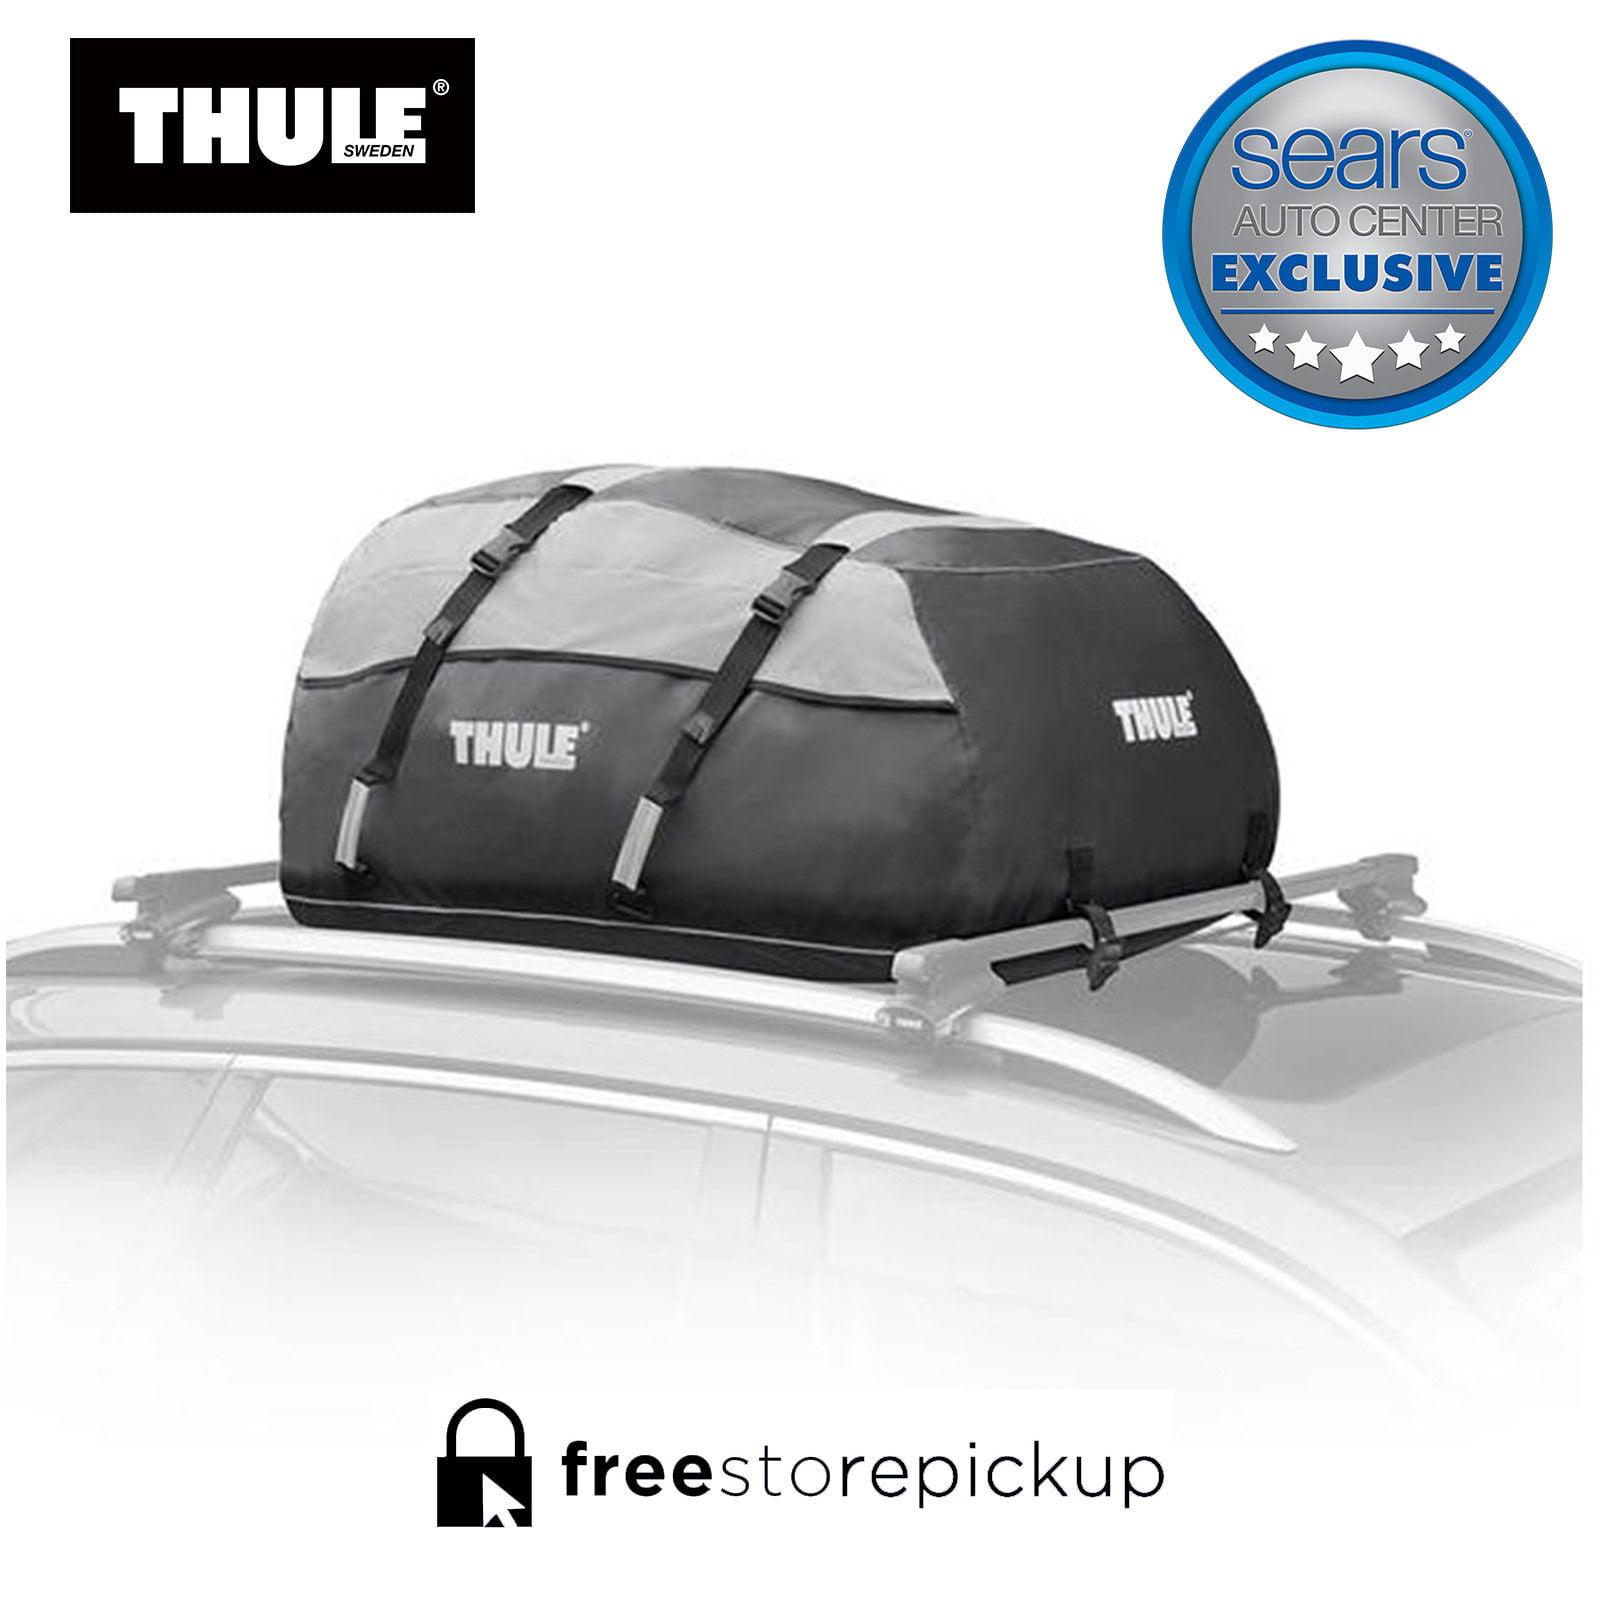 Thule Interstate Rooftop Cargo Bag - Water Resistant - 16 cu ft Thule Car Roof  Bag TH869